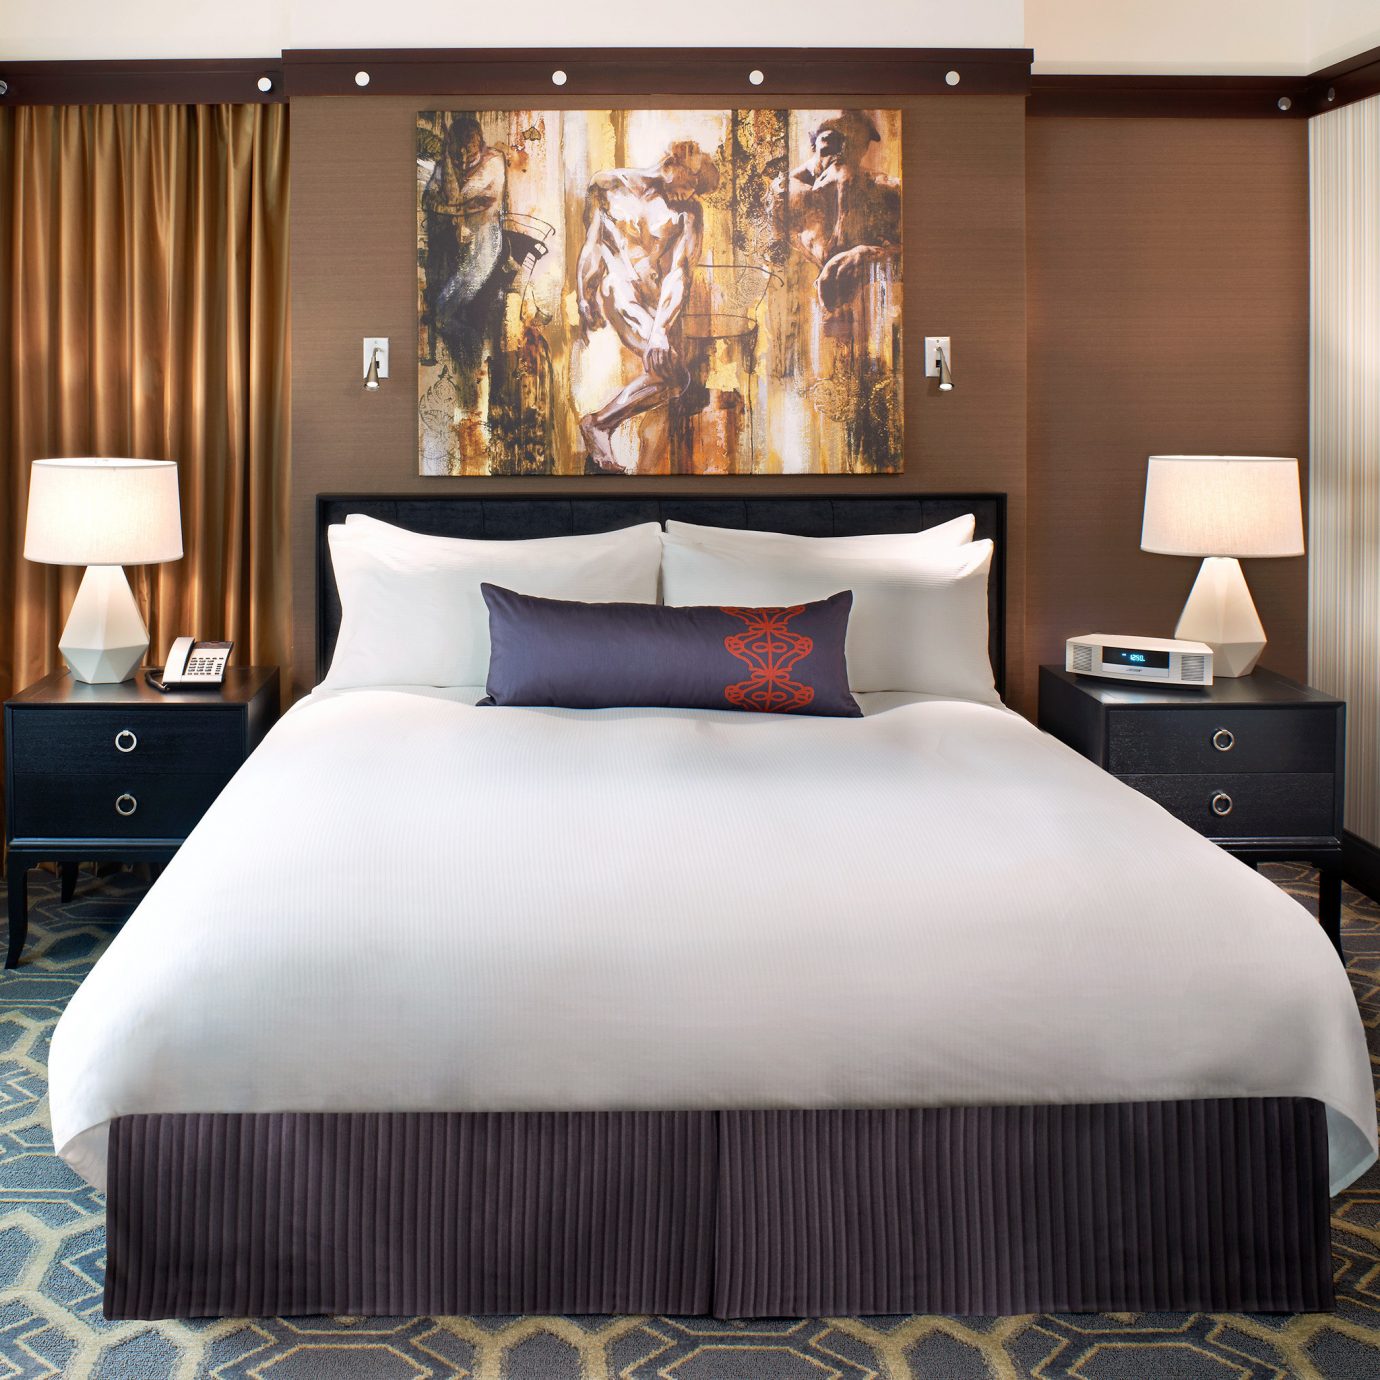 Bedroom City Classic Resort property Suite bed sheet bed frame nice